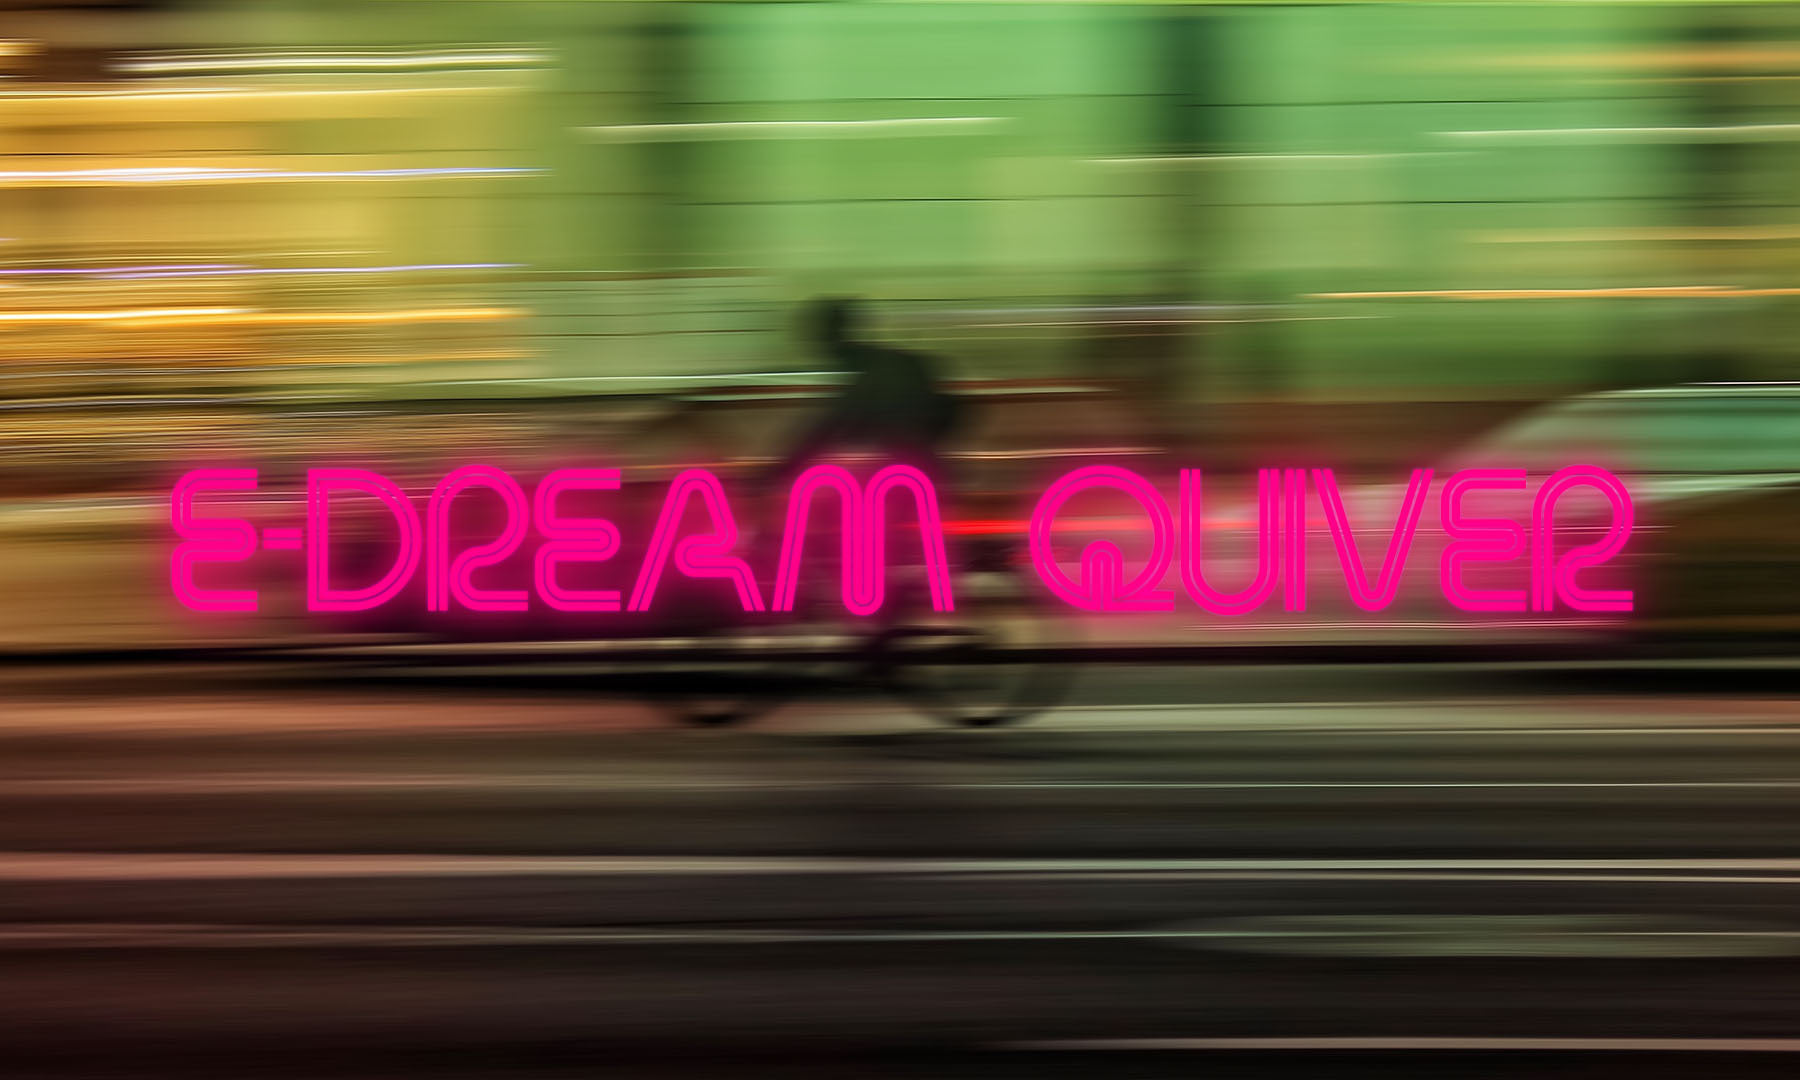 e-bike dream quiver